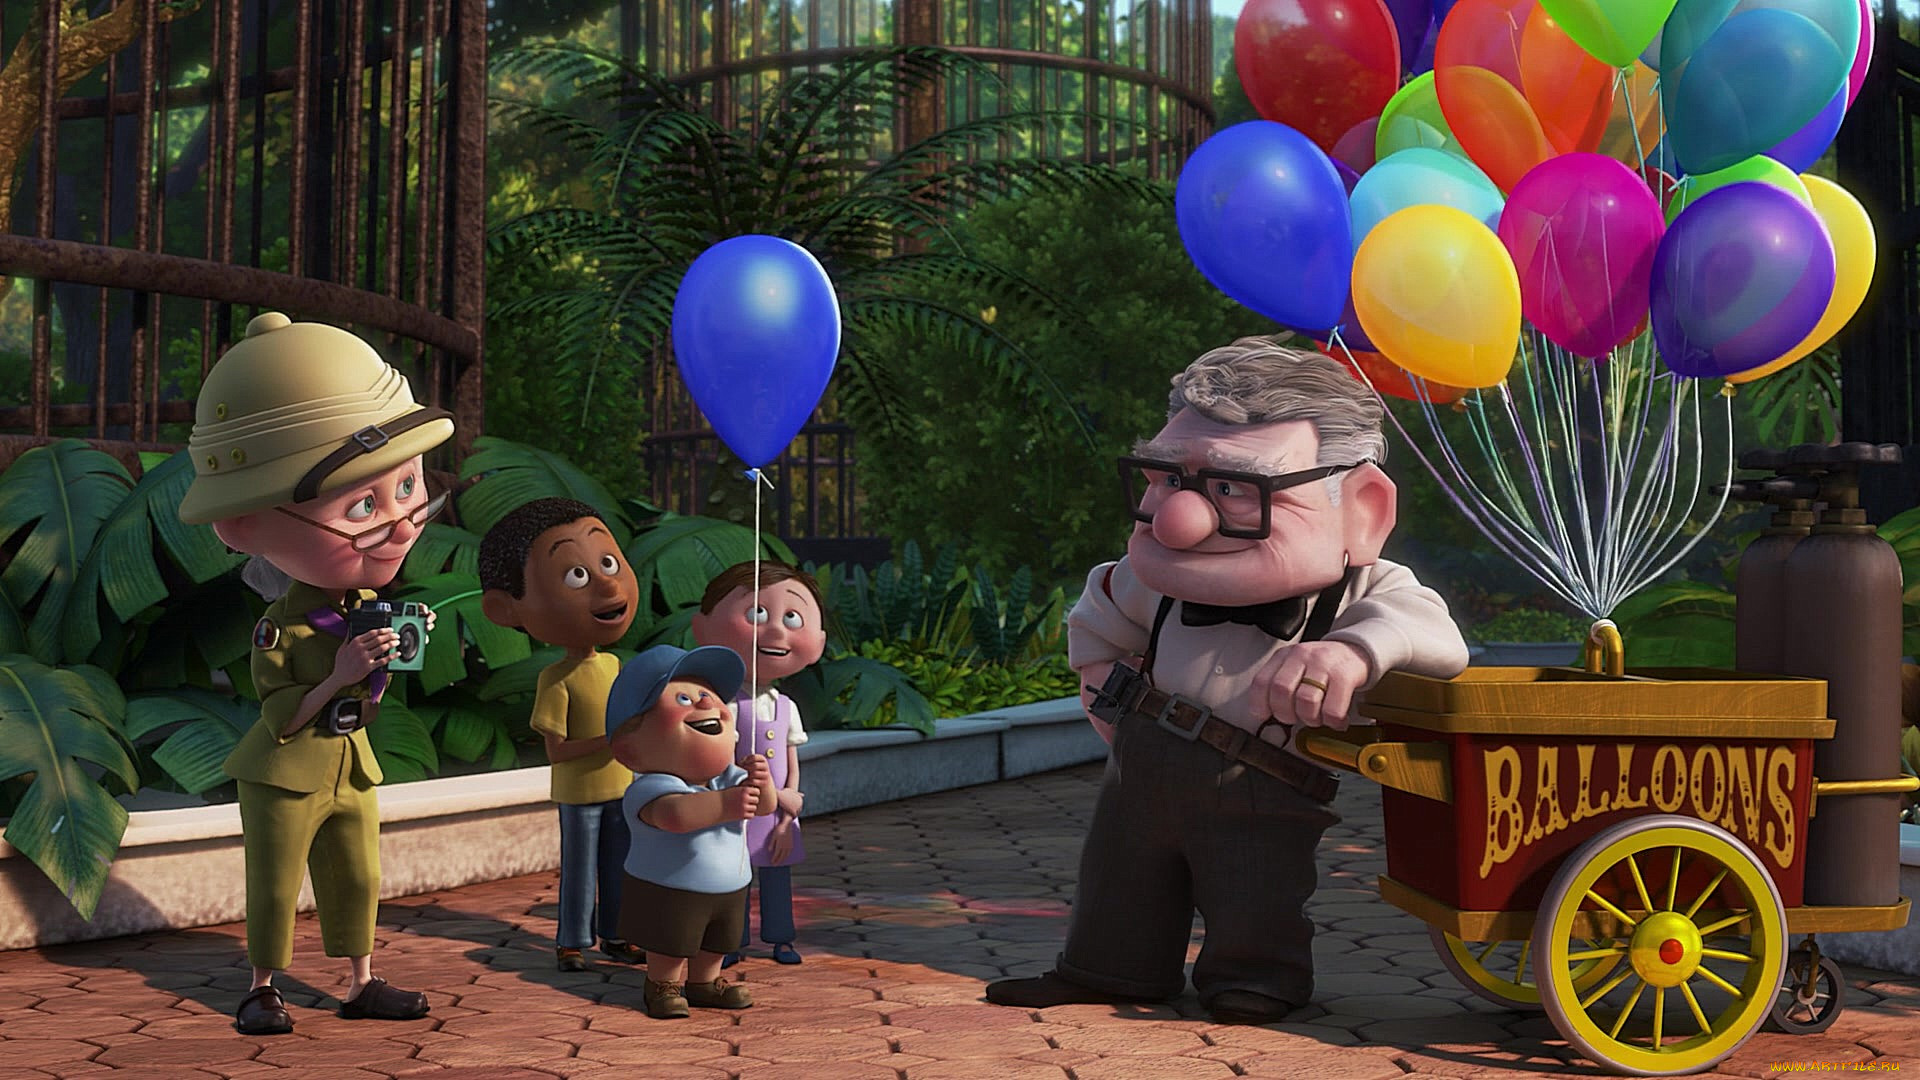 Включи про дедушку. Персонажи мультфильмов с шарами. Домик на воздушных шариках.